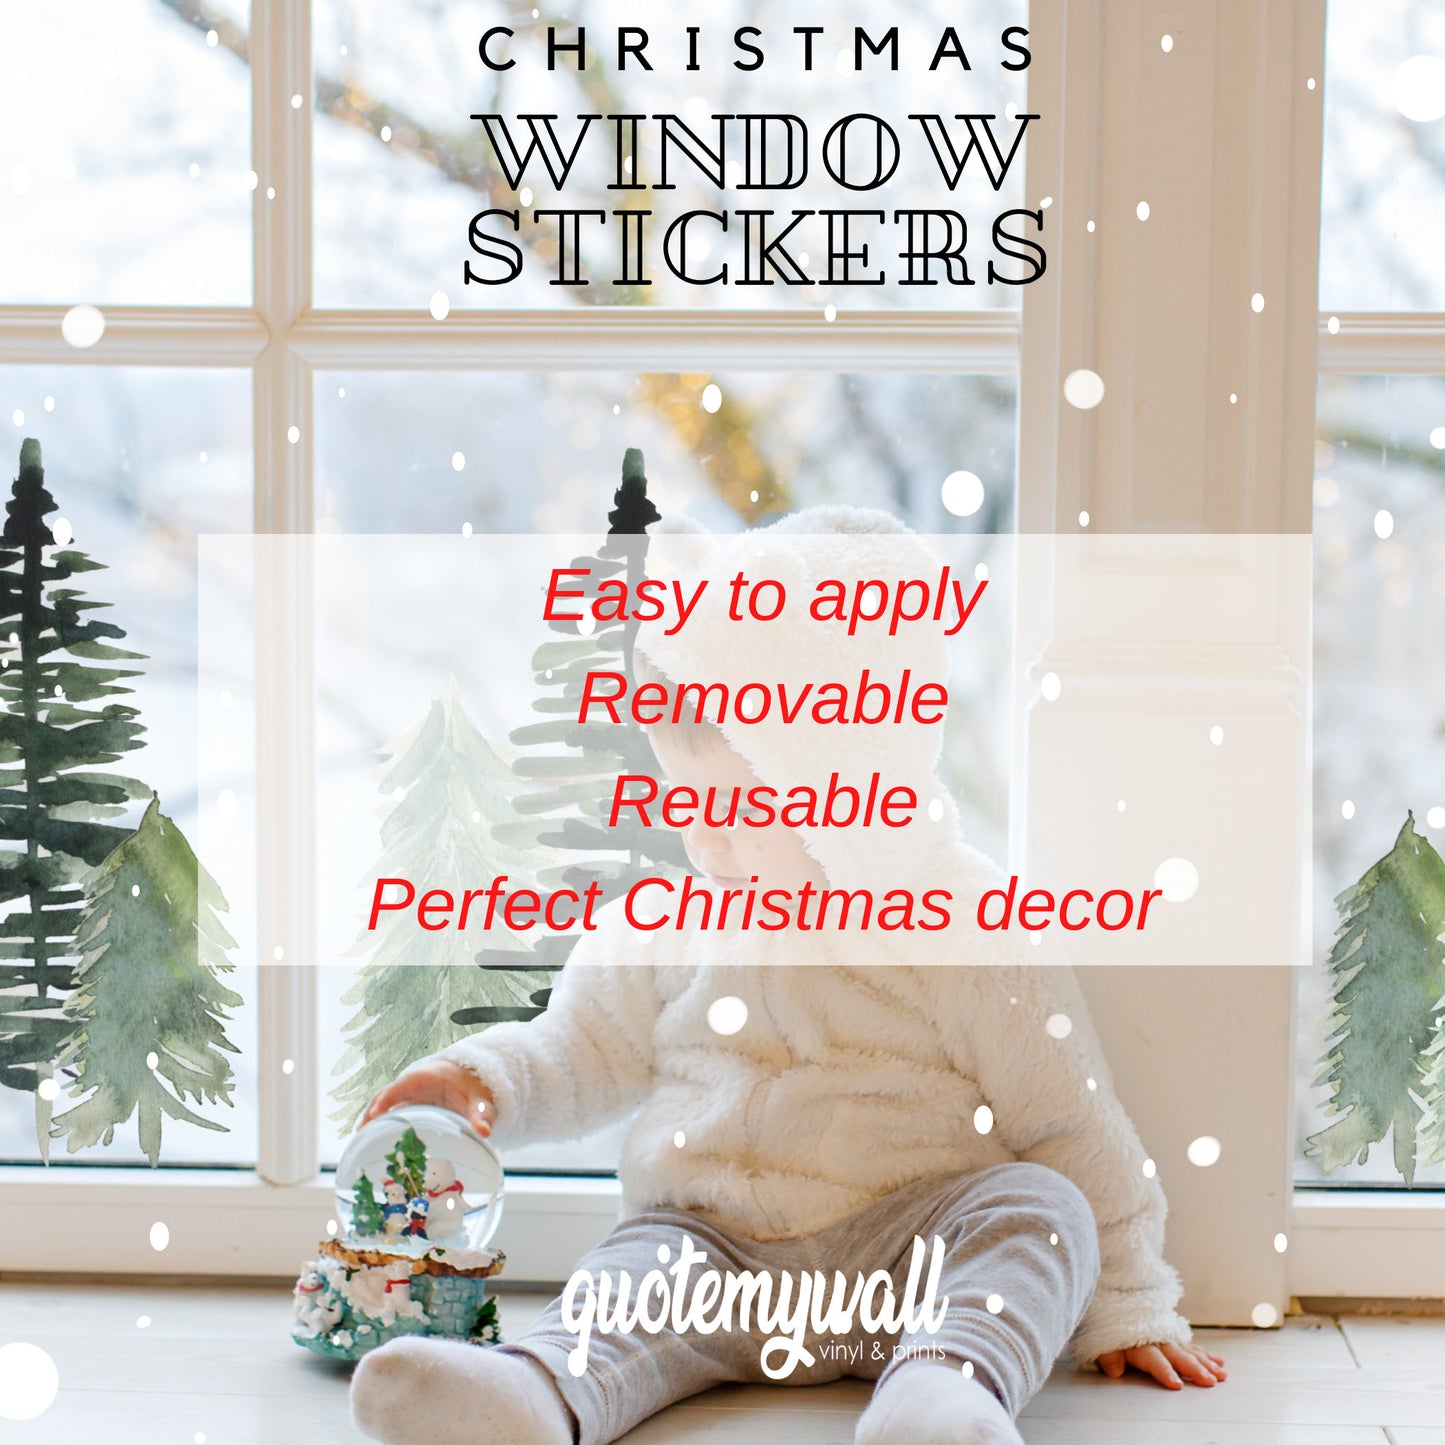 Christmas Baubles & Stars Window Stickers Window Decals Decor Decorations Xmas